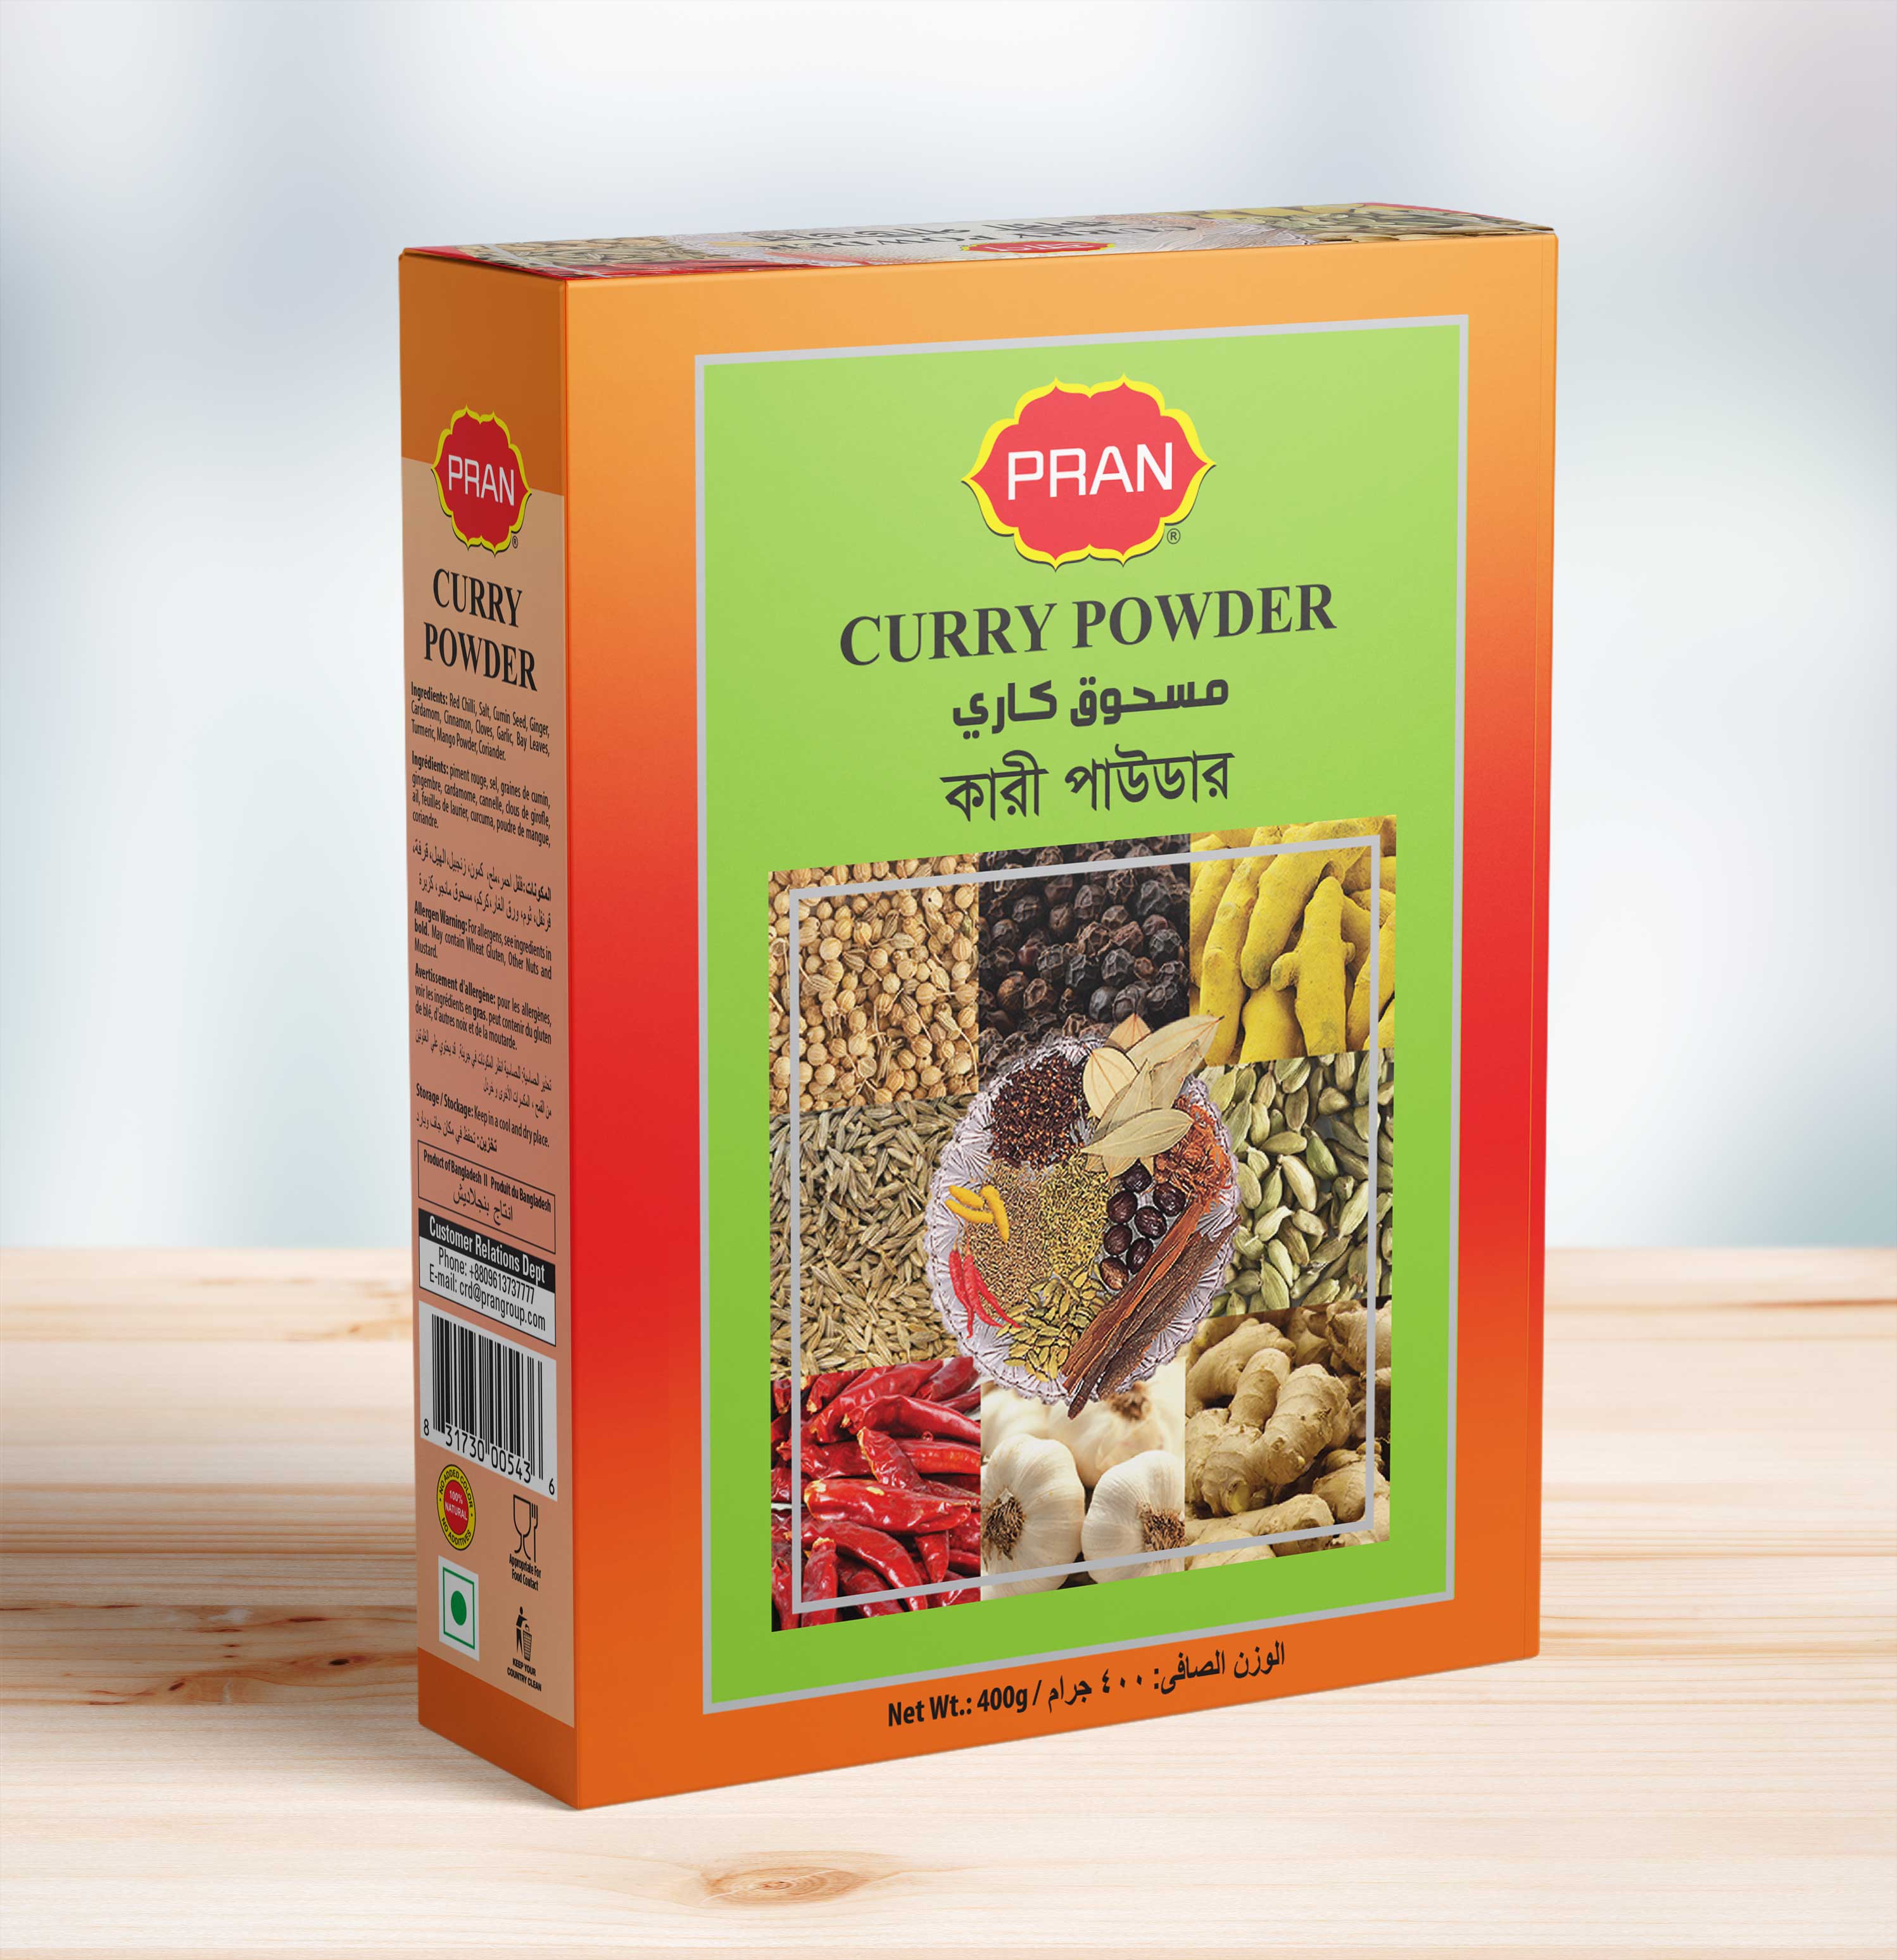 PRAN Curry Powder